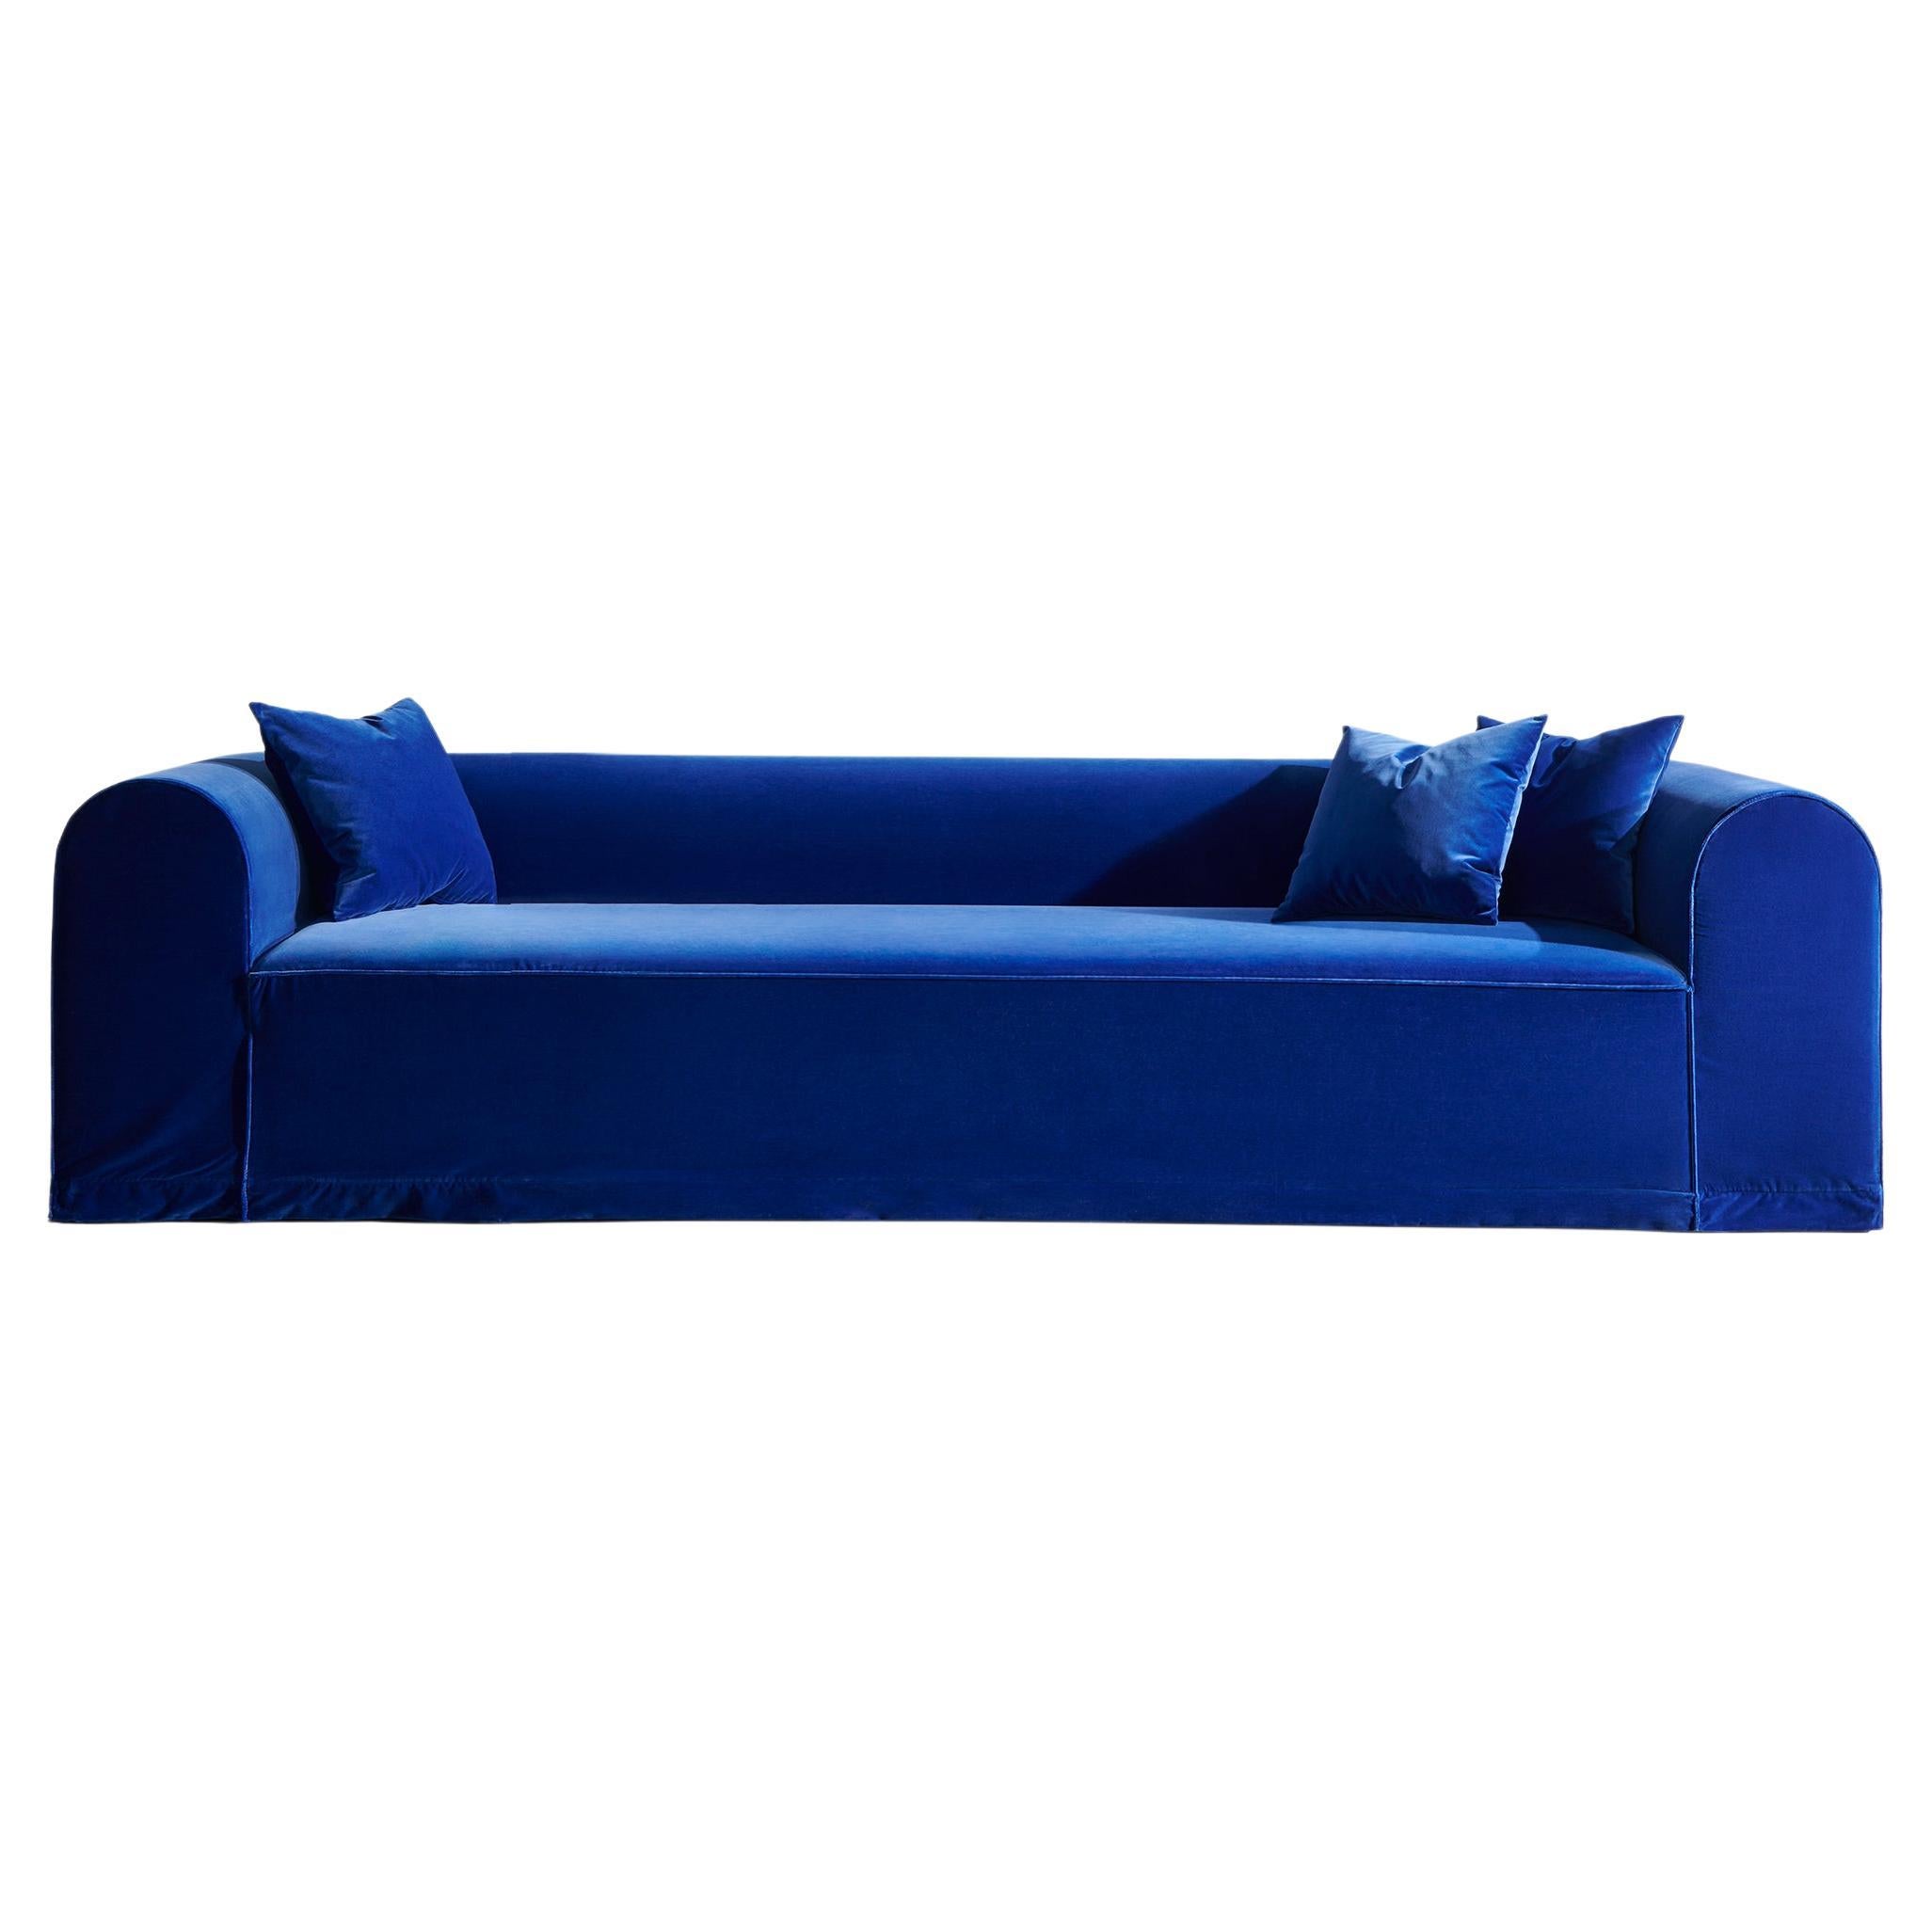 Wittmann Customizable Blocks Sofa by Neri&Hu For Sale